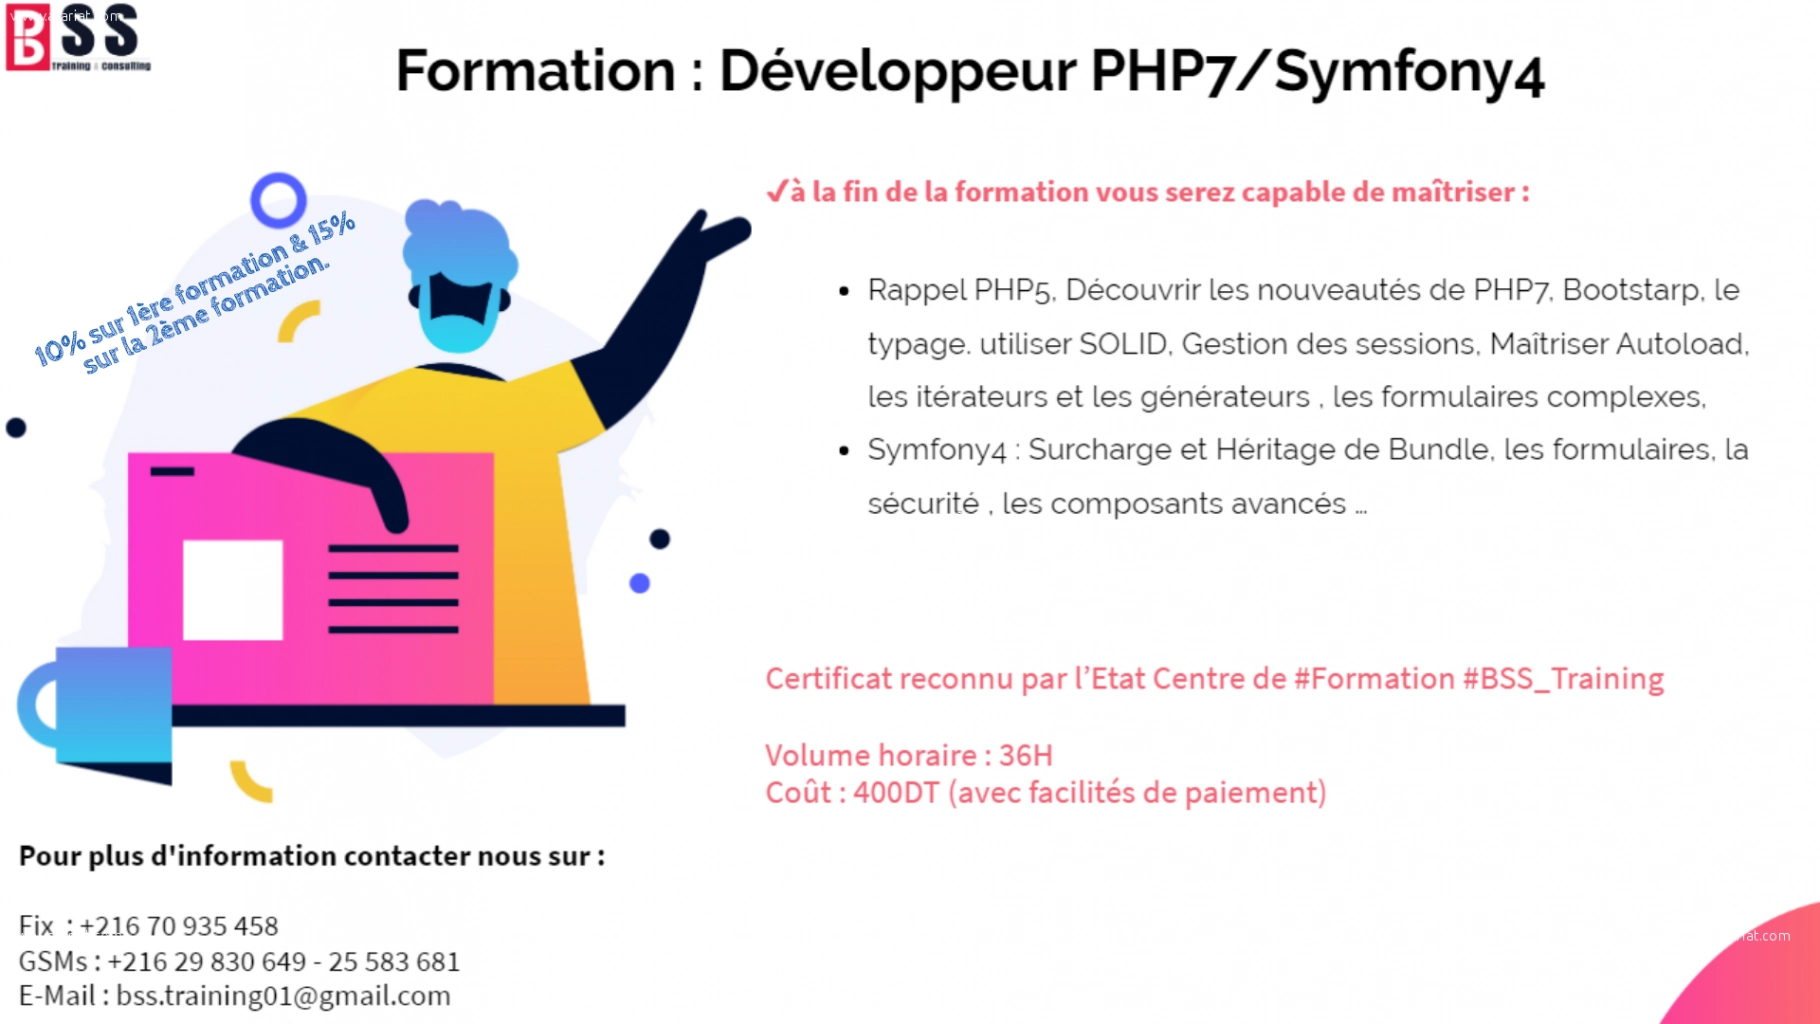 Formation :Développeur PHP7/Symfony4